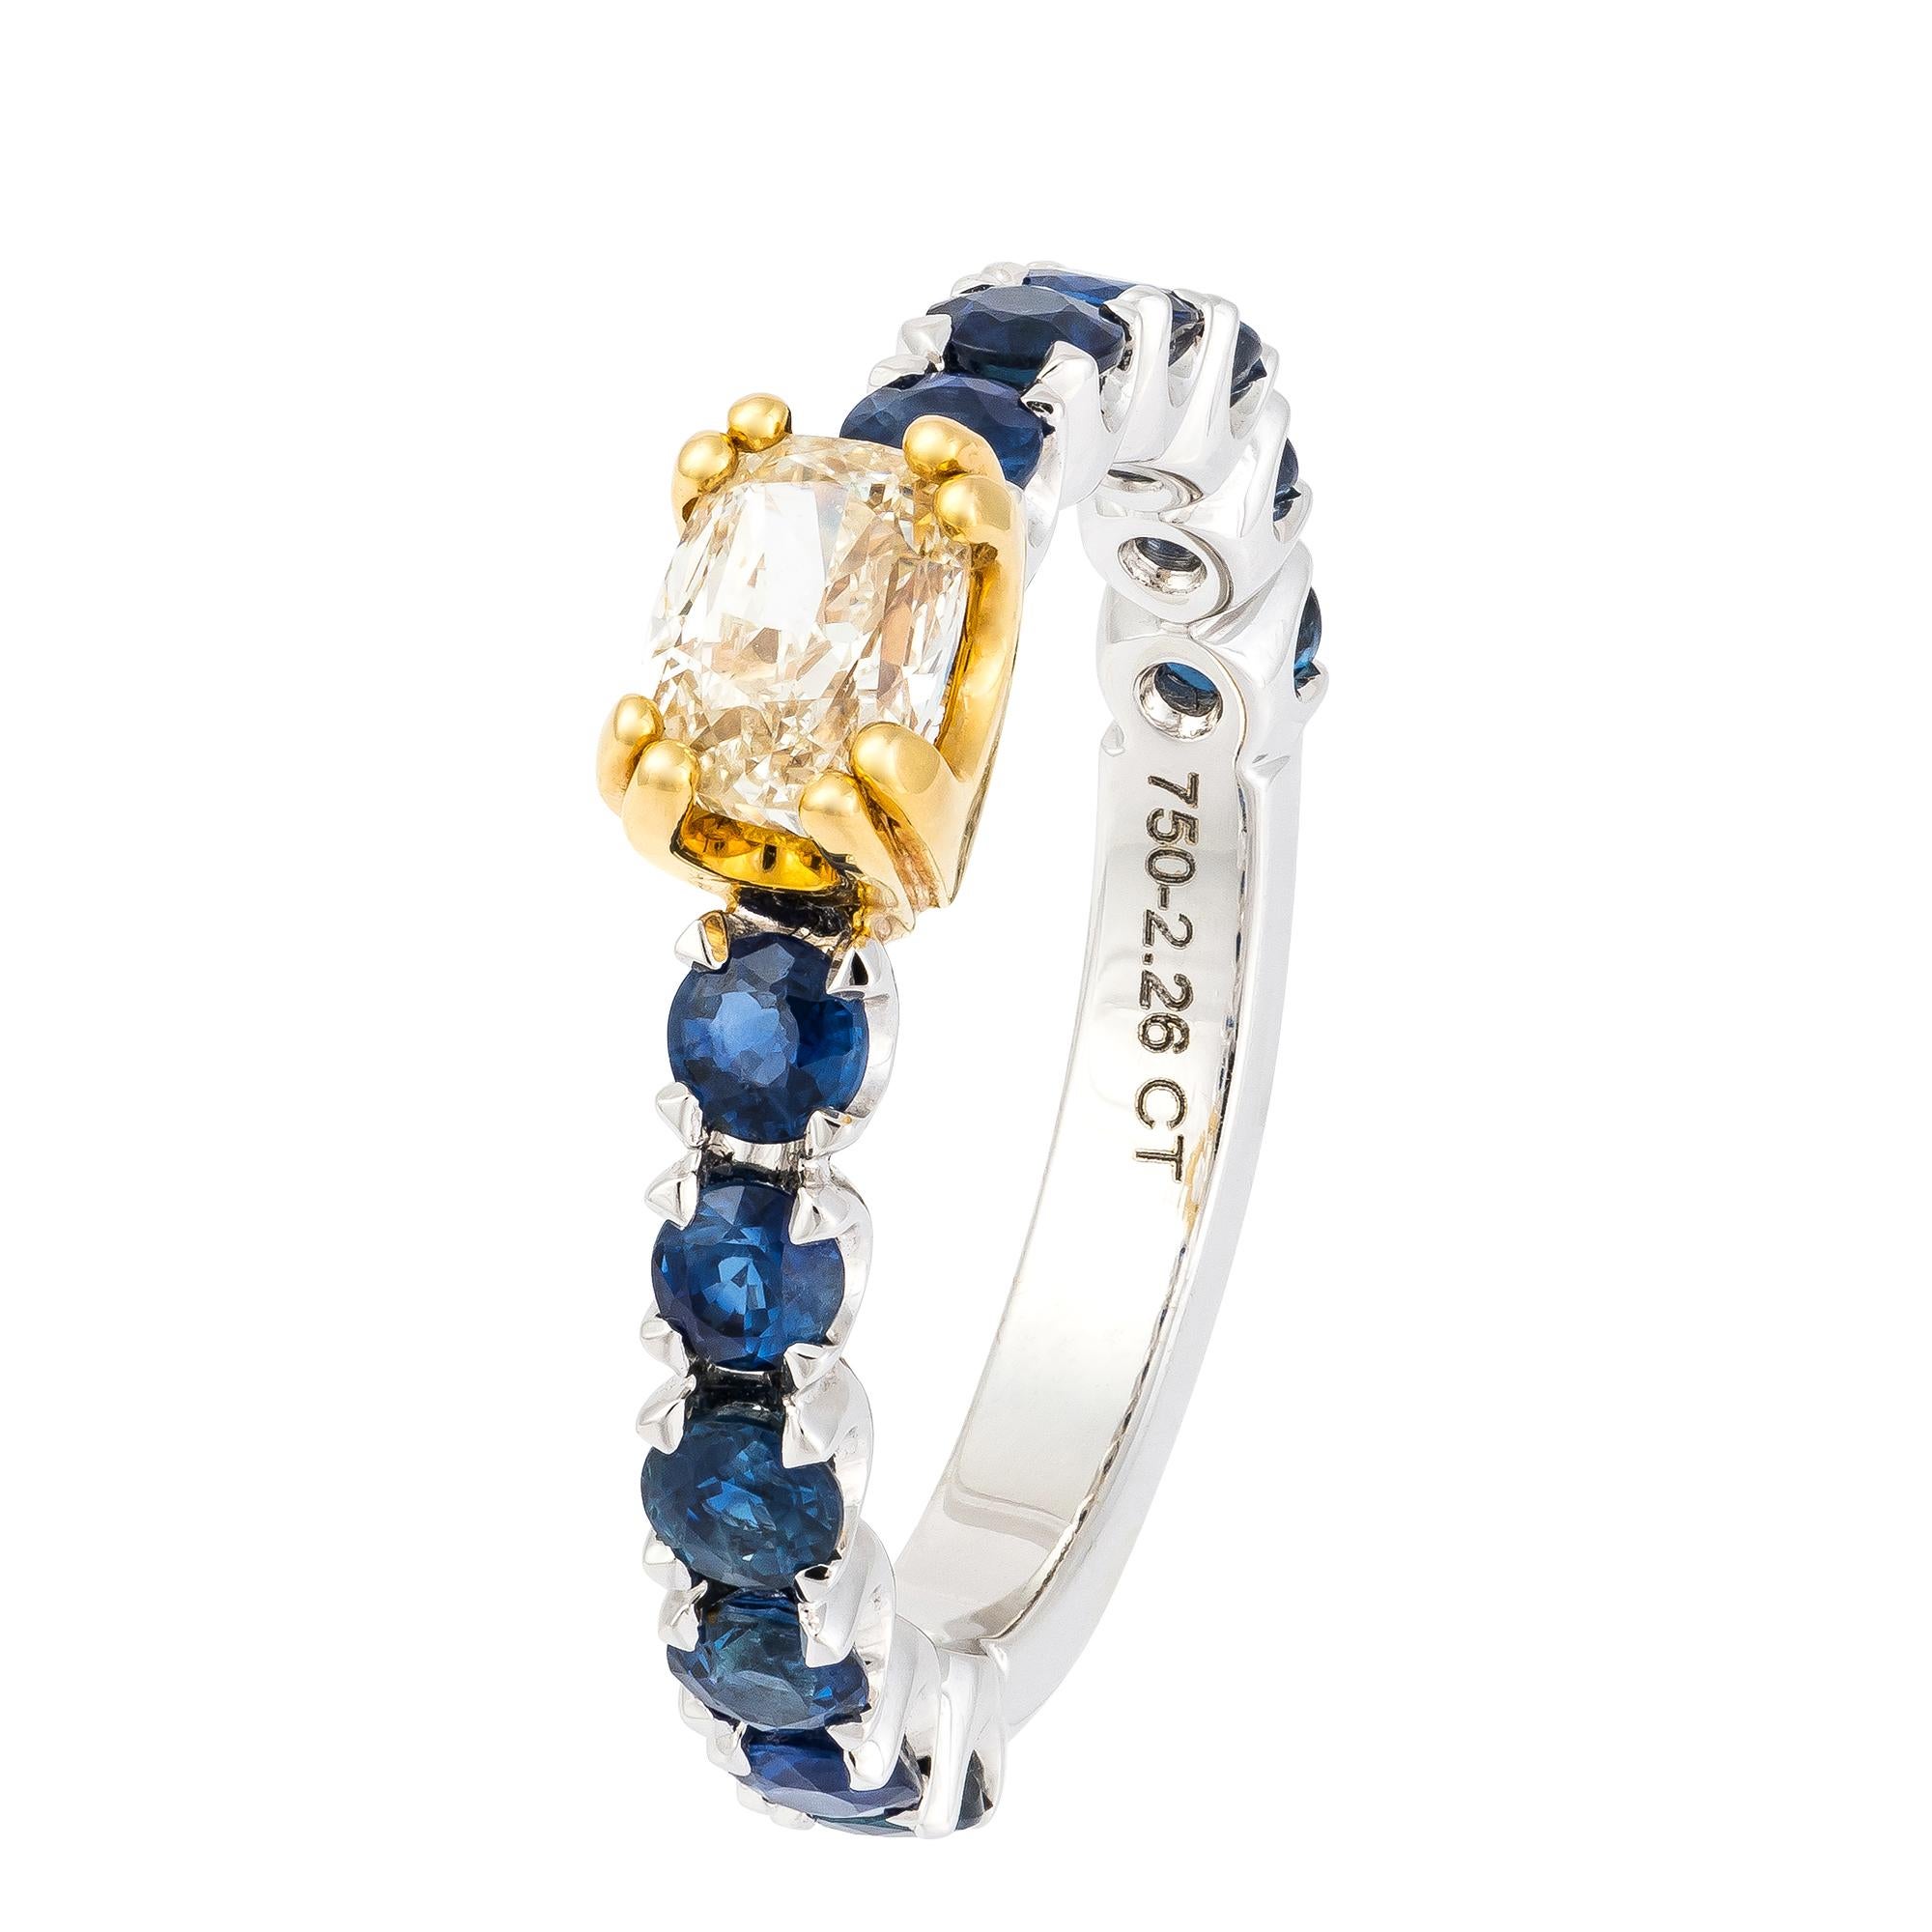 RING 18K TT Blue Sapphire 1.54 Cts/12 Pcs Yellow Diamond 0.72 Cts/1 Pcs
